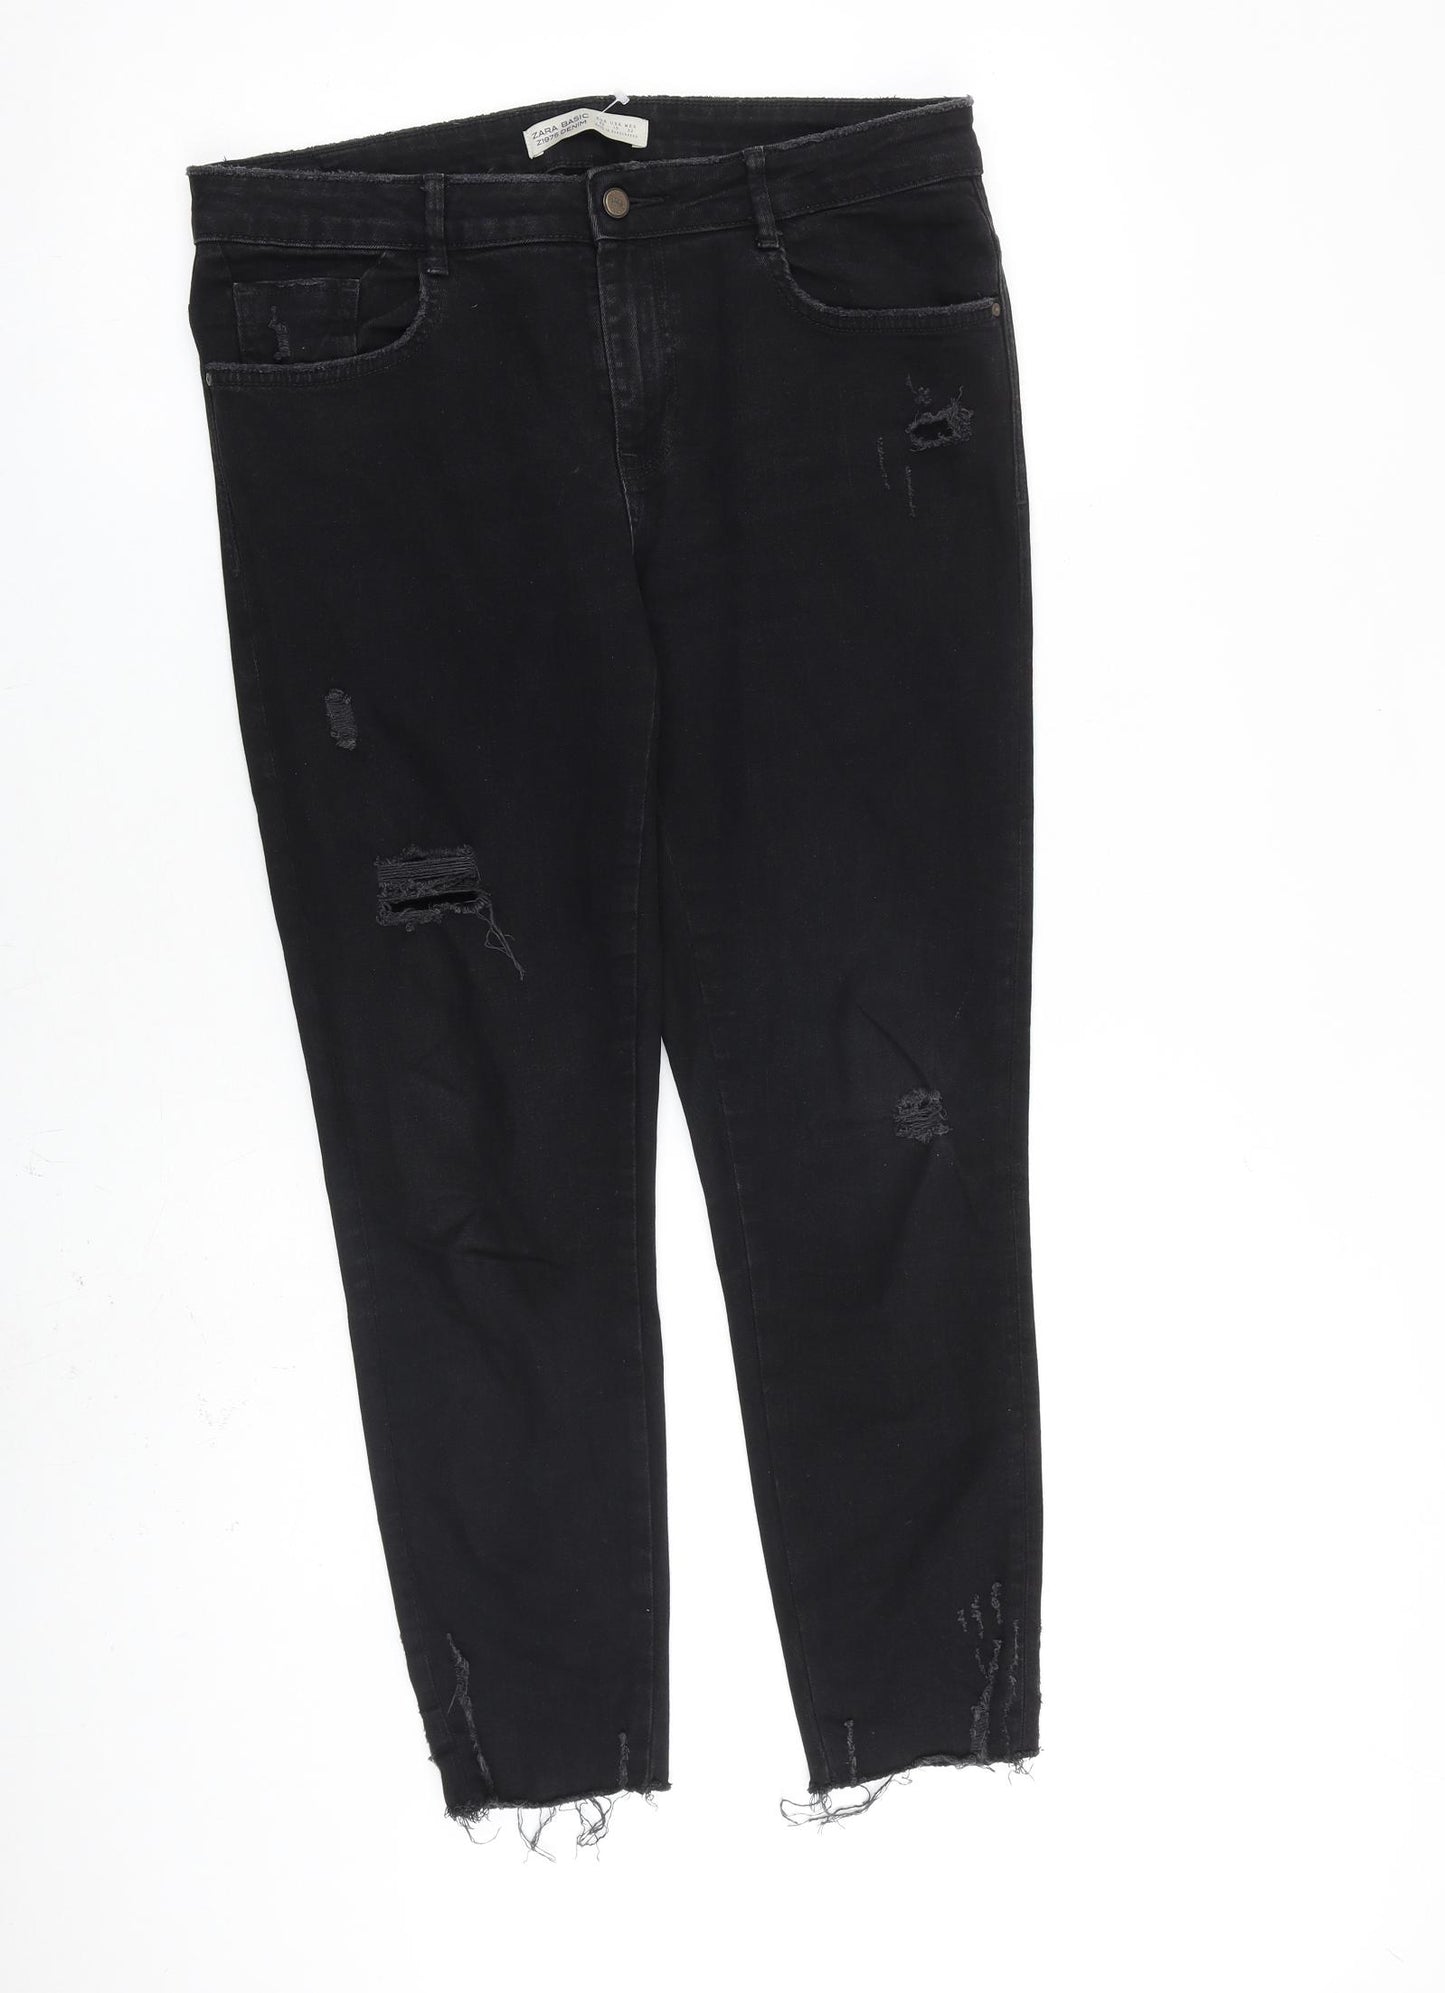 Zara Womens Black Cotton Skinny Jeans Size 14 L27 in Regular Zip - Raw Hem